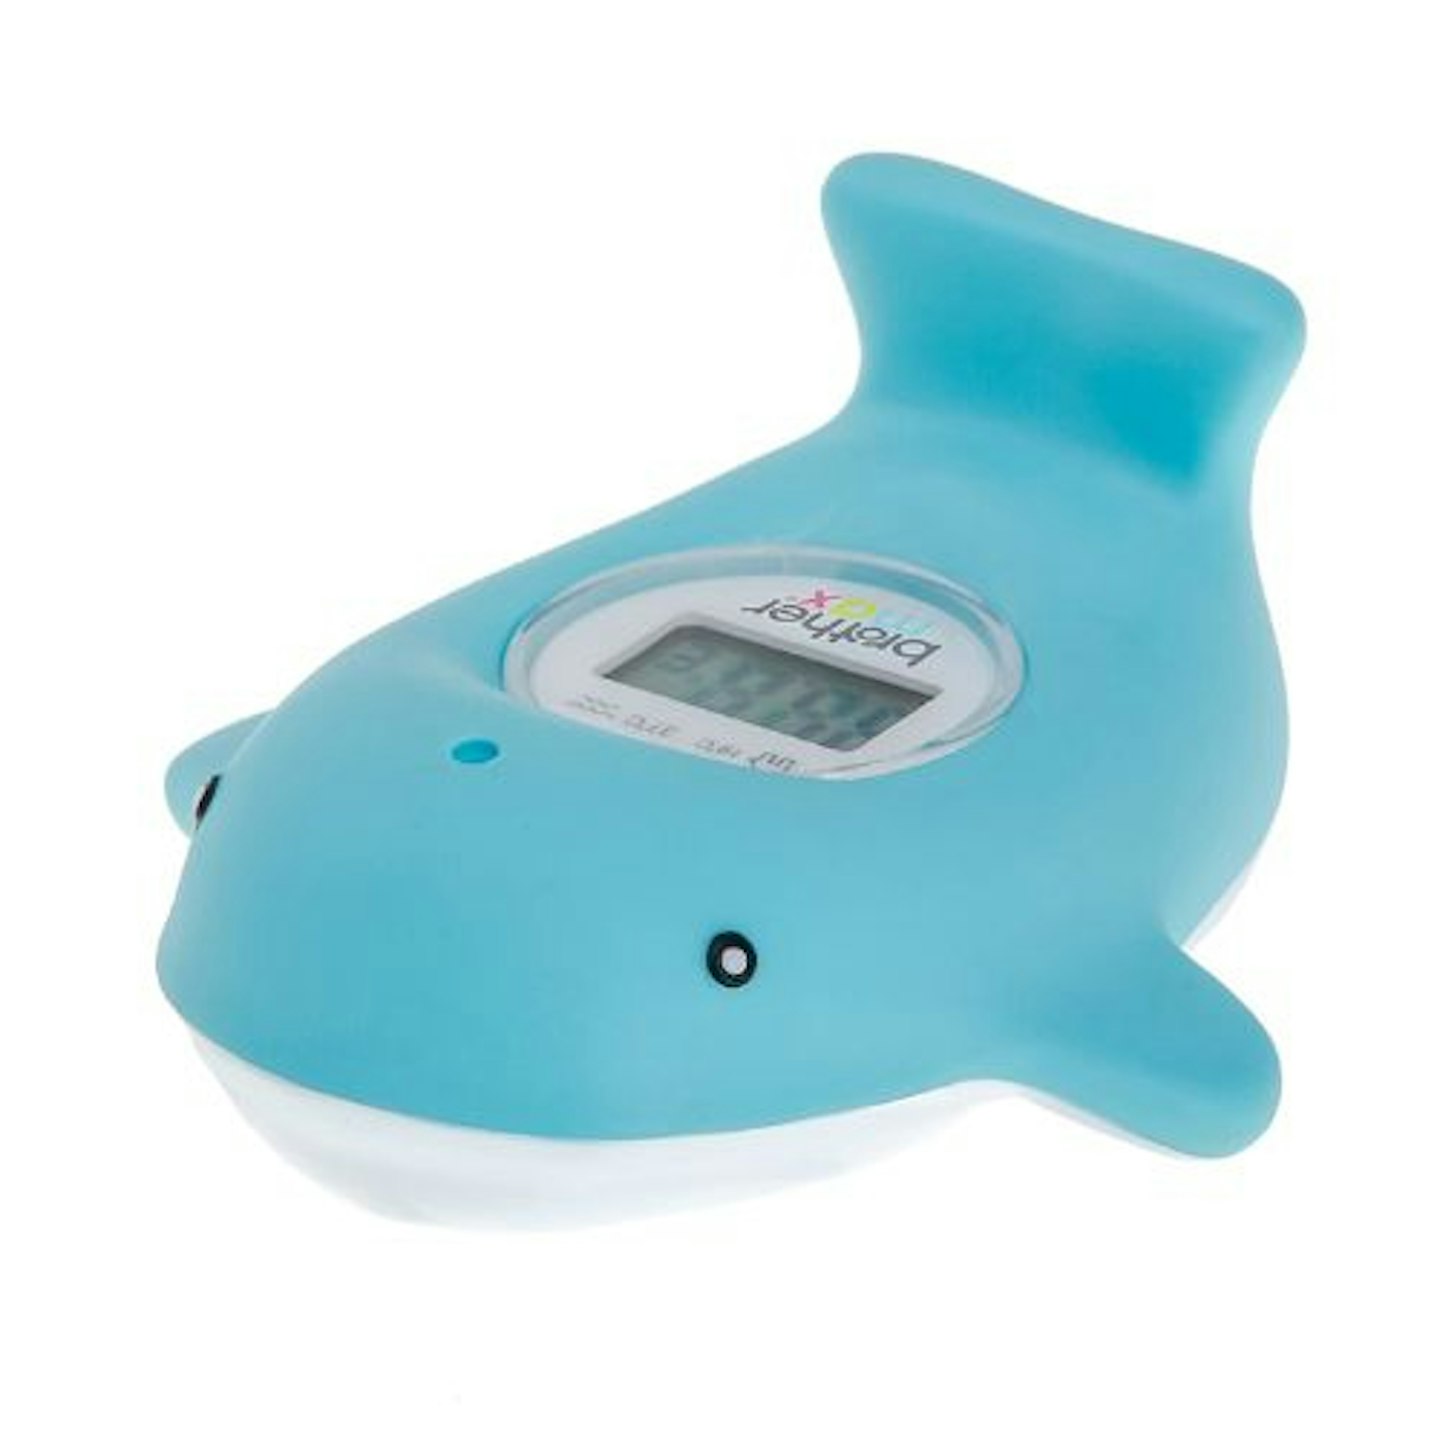 Purflo Starlight Baby Room Thermometer – Baby Lurve